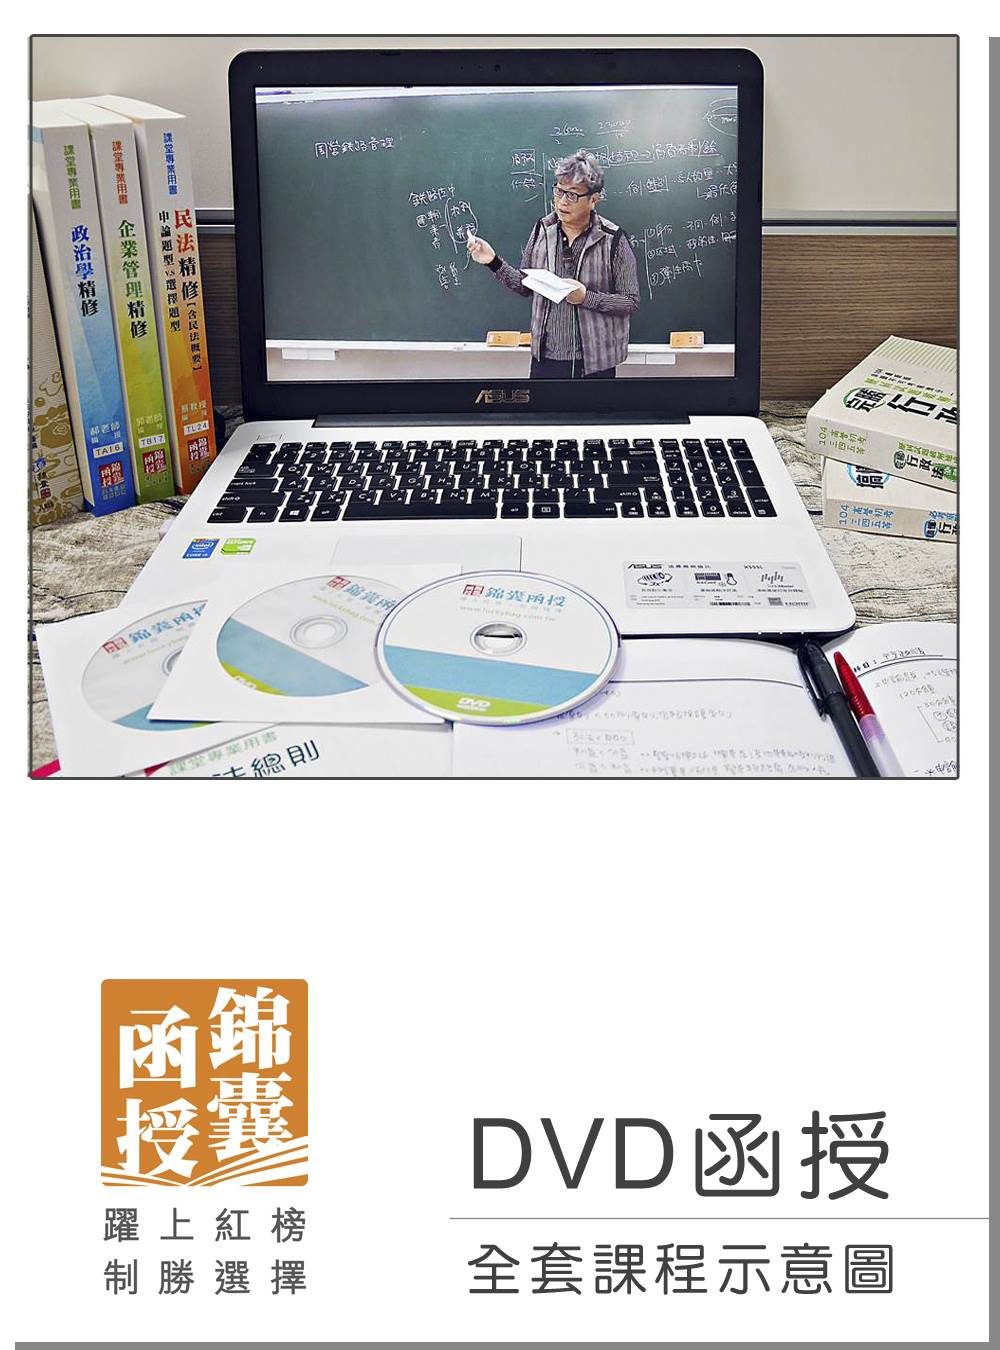 【DVD函授】105年國營事業聯招(企管組)-全套課程